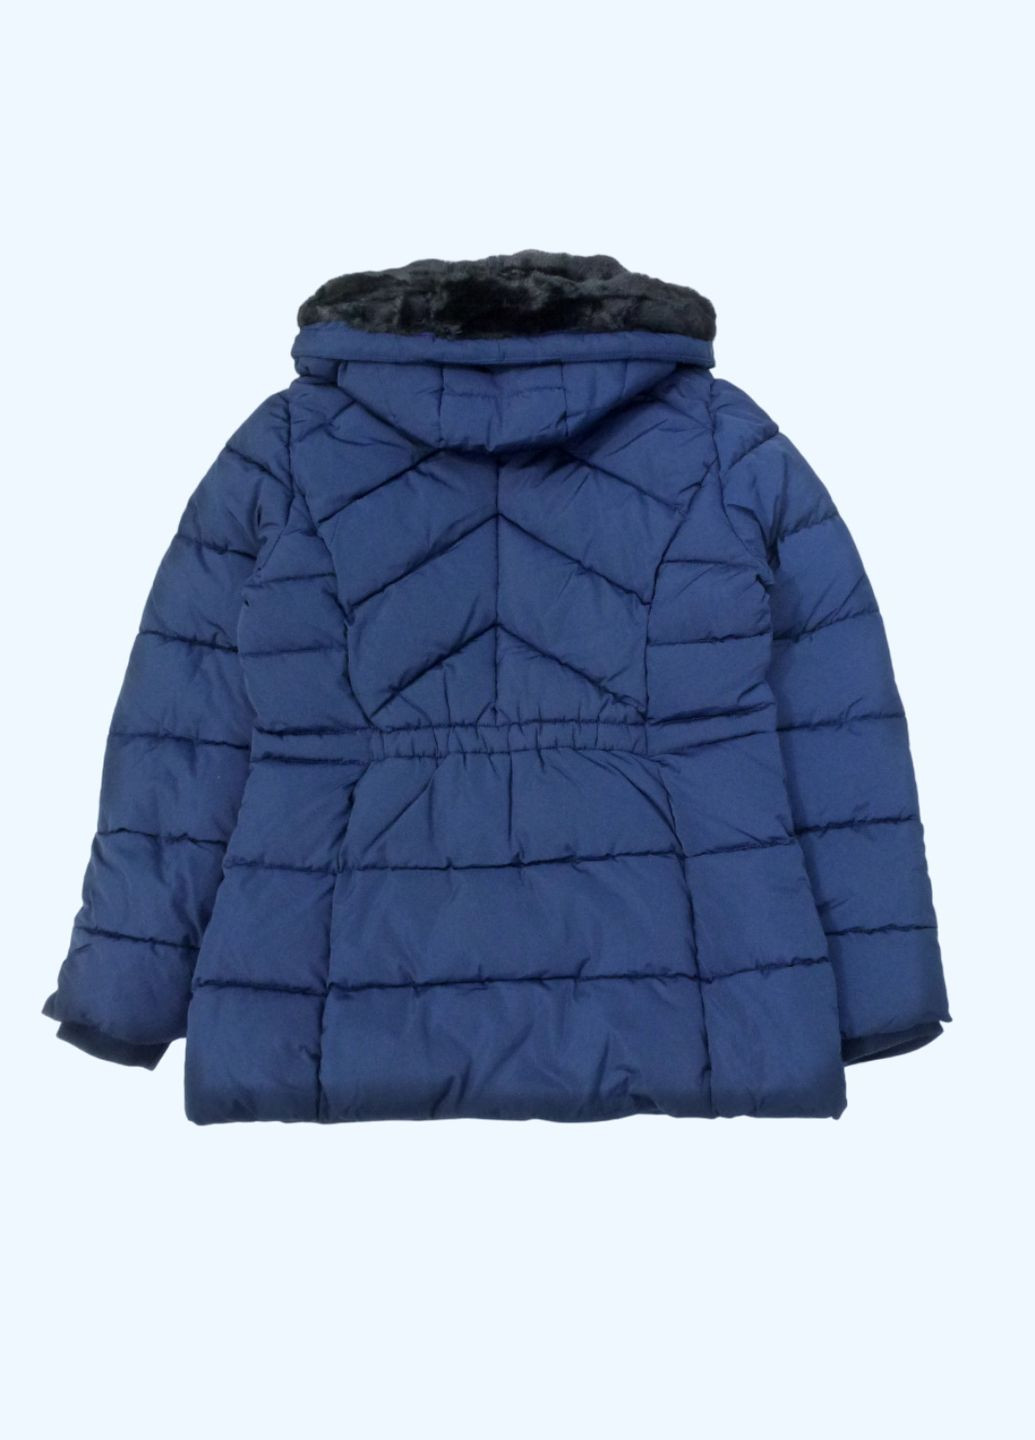 Синяя зимняя куртка зимняя стеганная, еврозима, 140-146 см, 10-11 л George